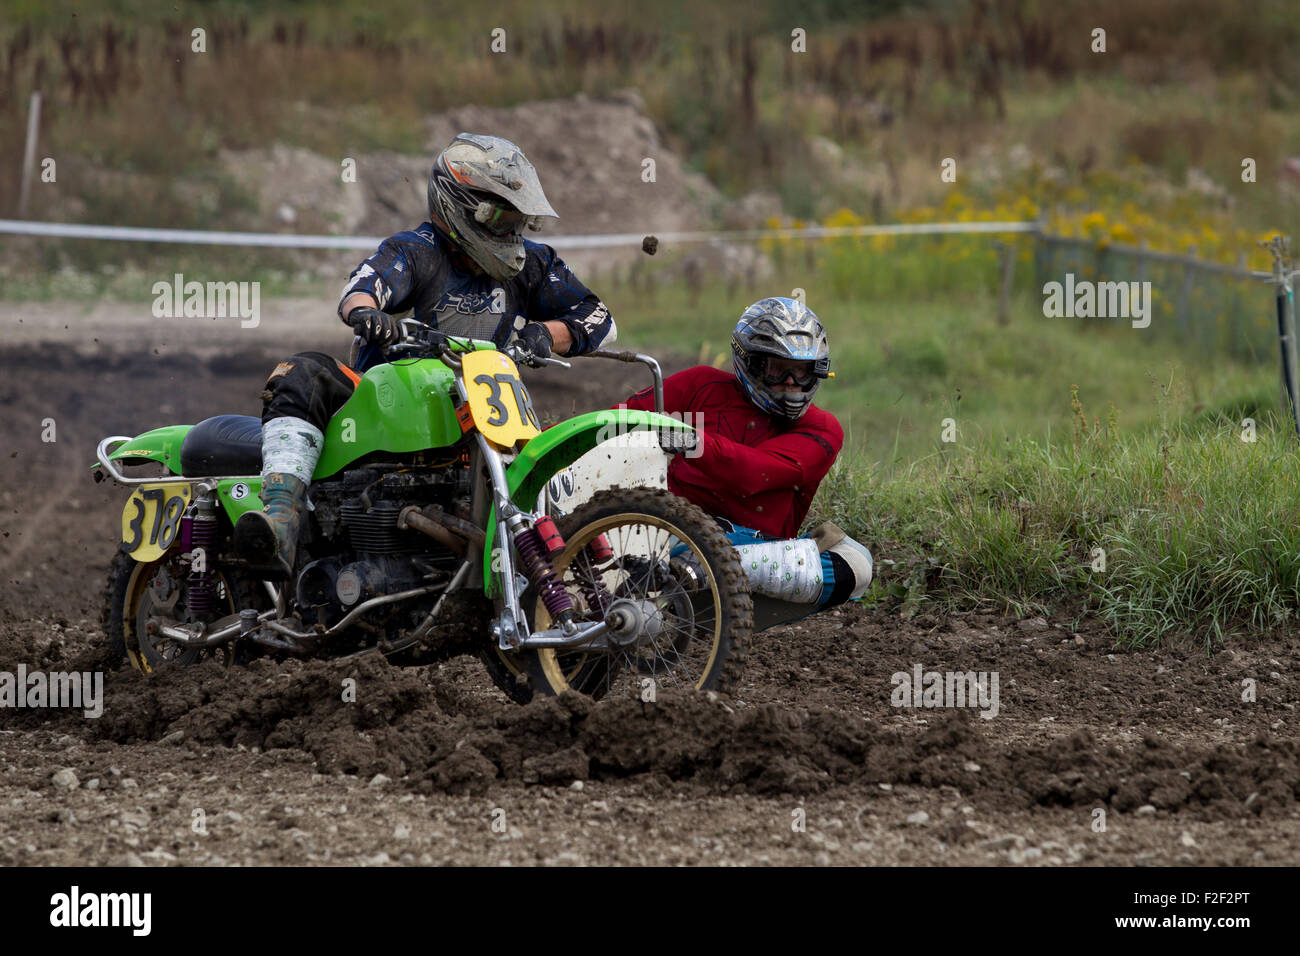 Sidecarcross racing Motocross at Swedish cross track Stock Photo